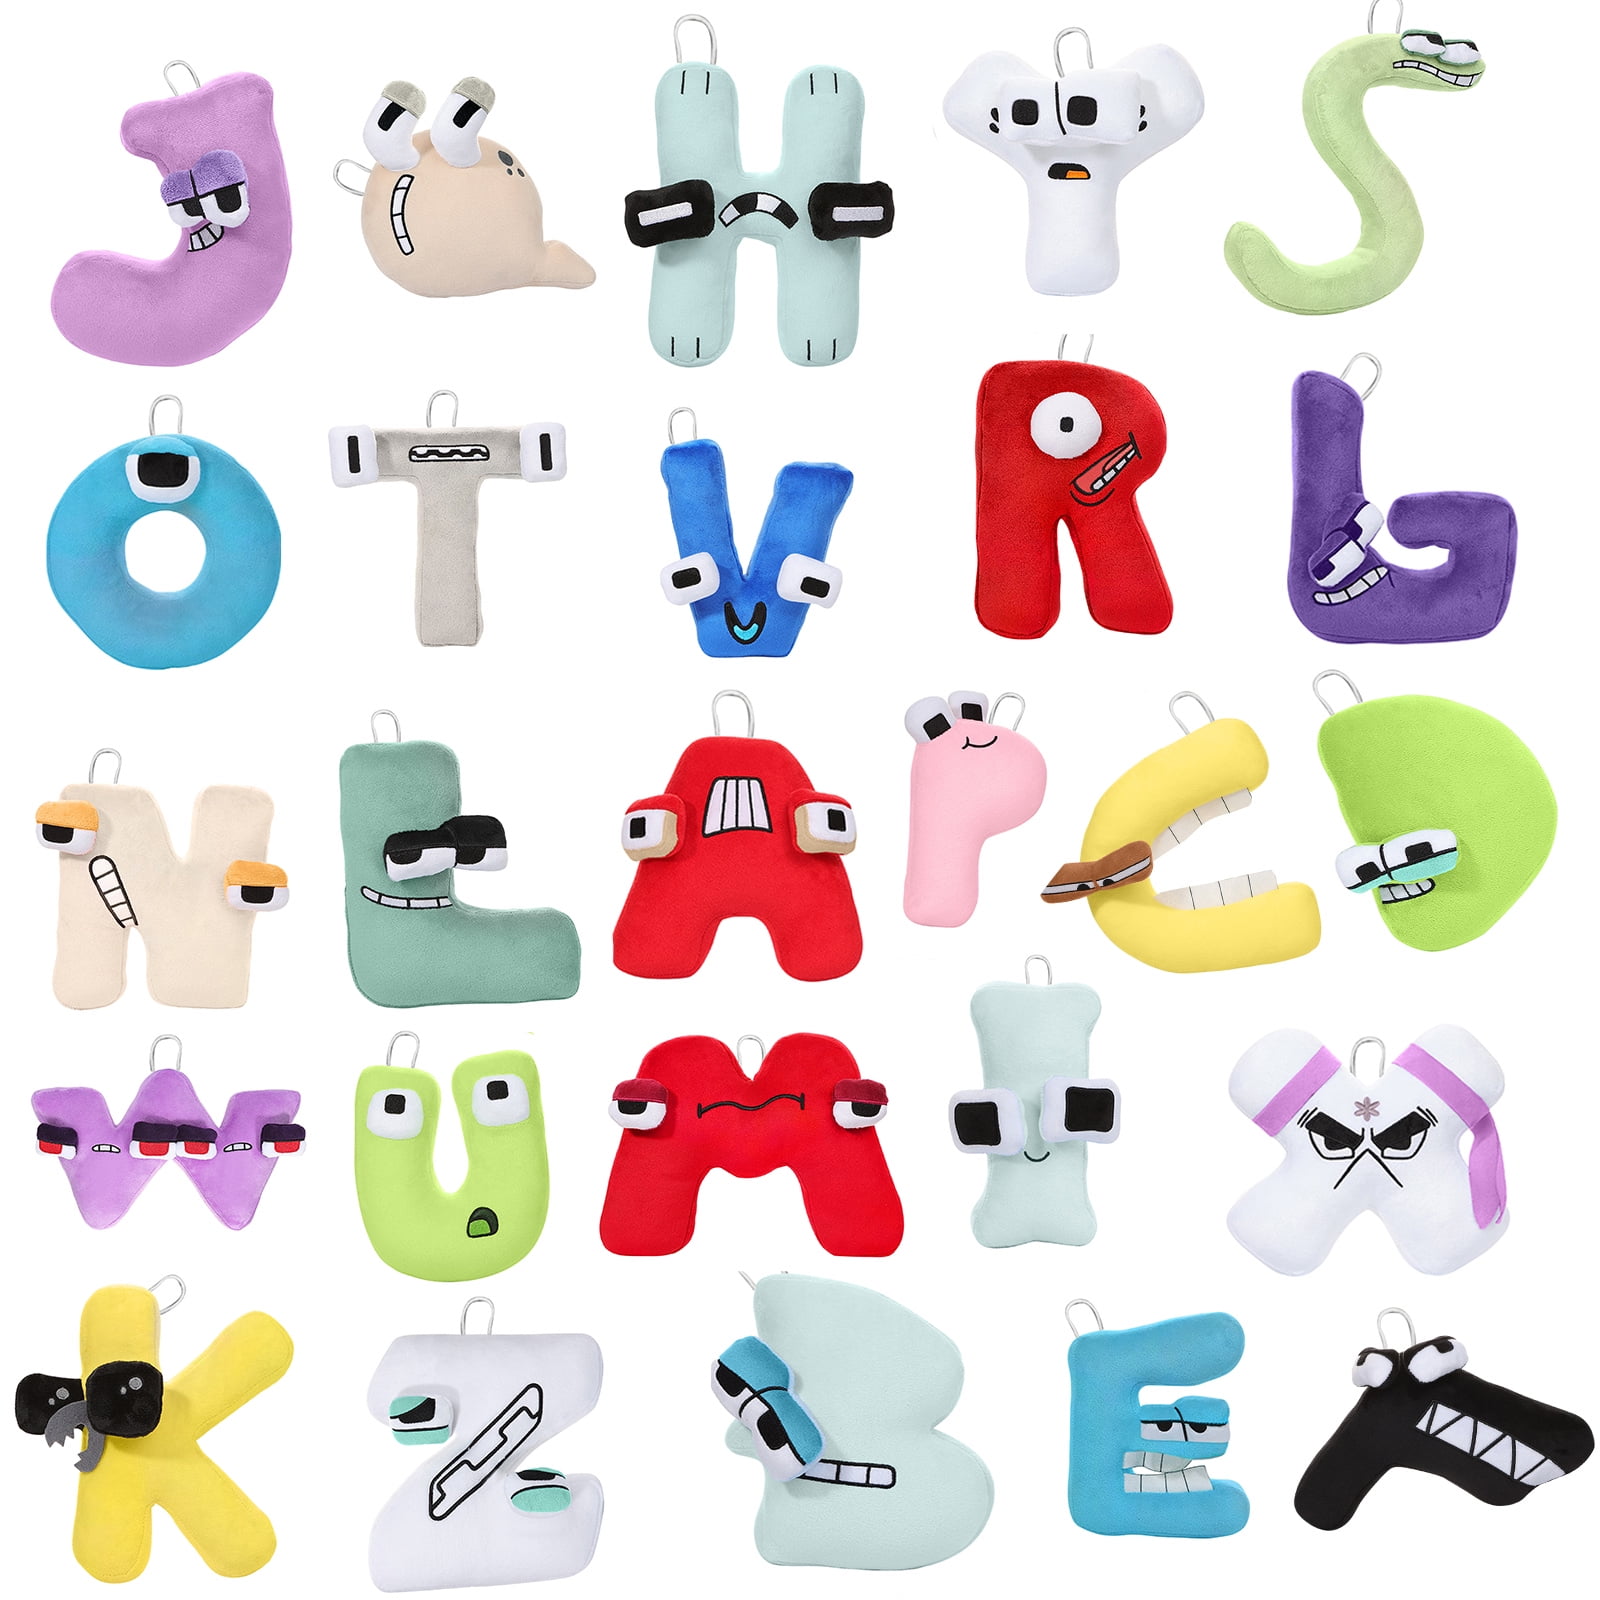  Alphabet Lore Plush,Alphabet Lore Plushies Stuffed Animal Doll  Toys,Kids Birthday Party Favor Preferred Gift for Holidays,Birthdays (3pcs)  : Toys & Games